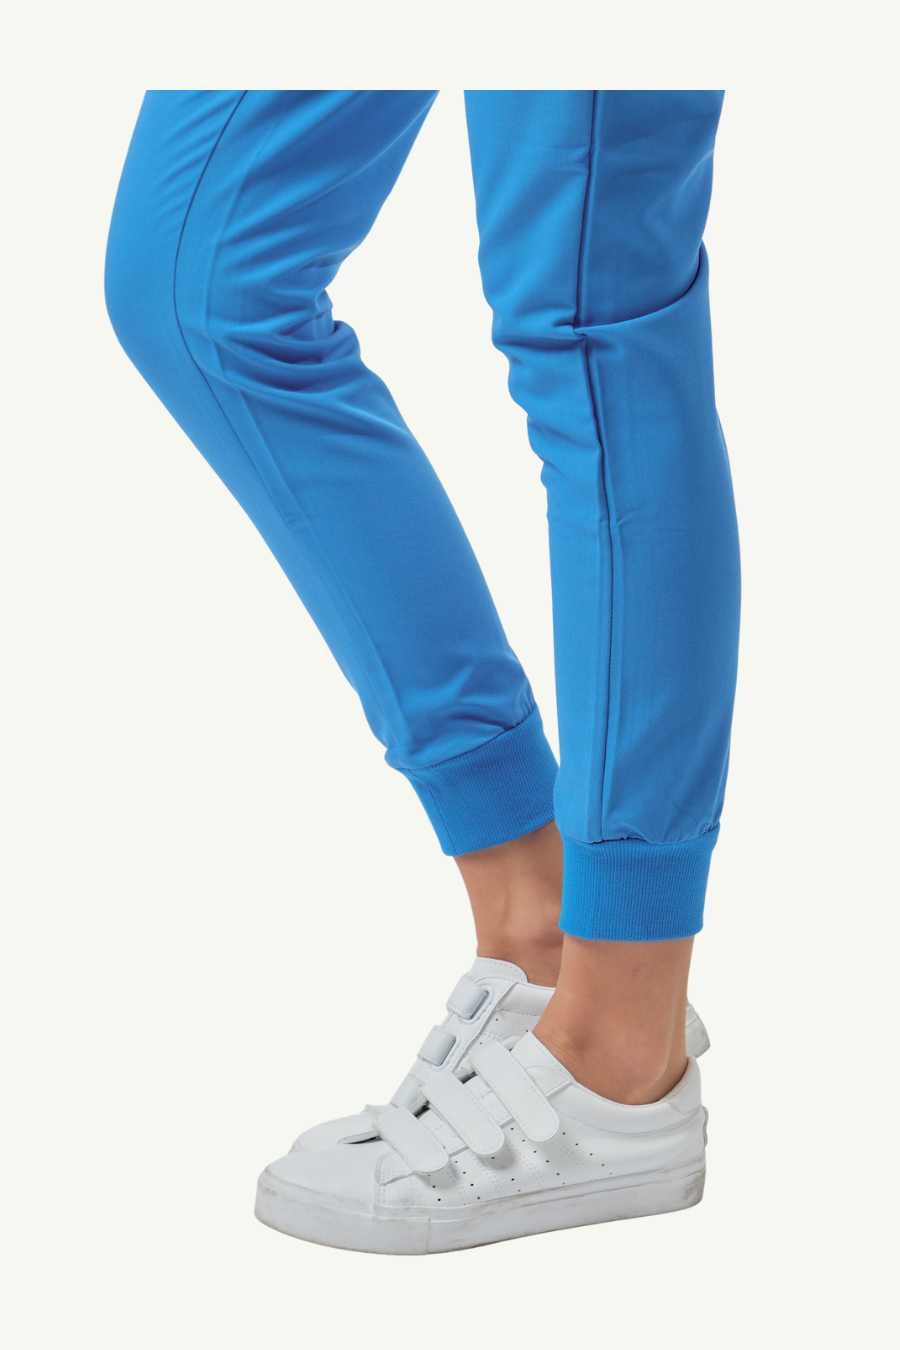 our BOWIE 5-pocket jogger womens scrub pants in light khaki – shopcaniboo